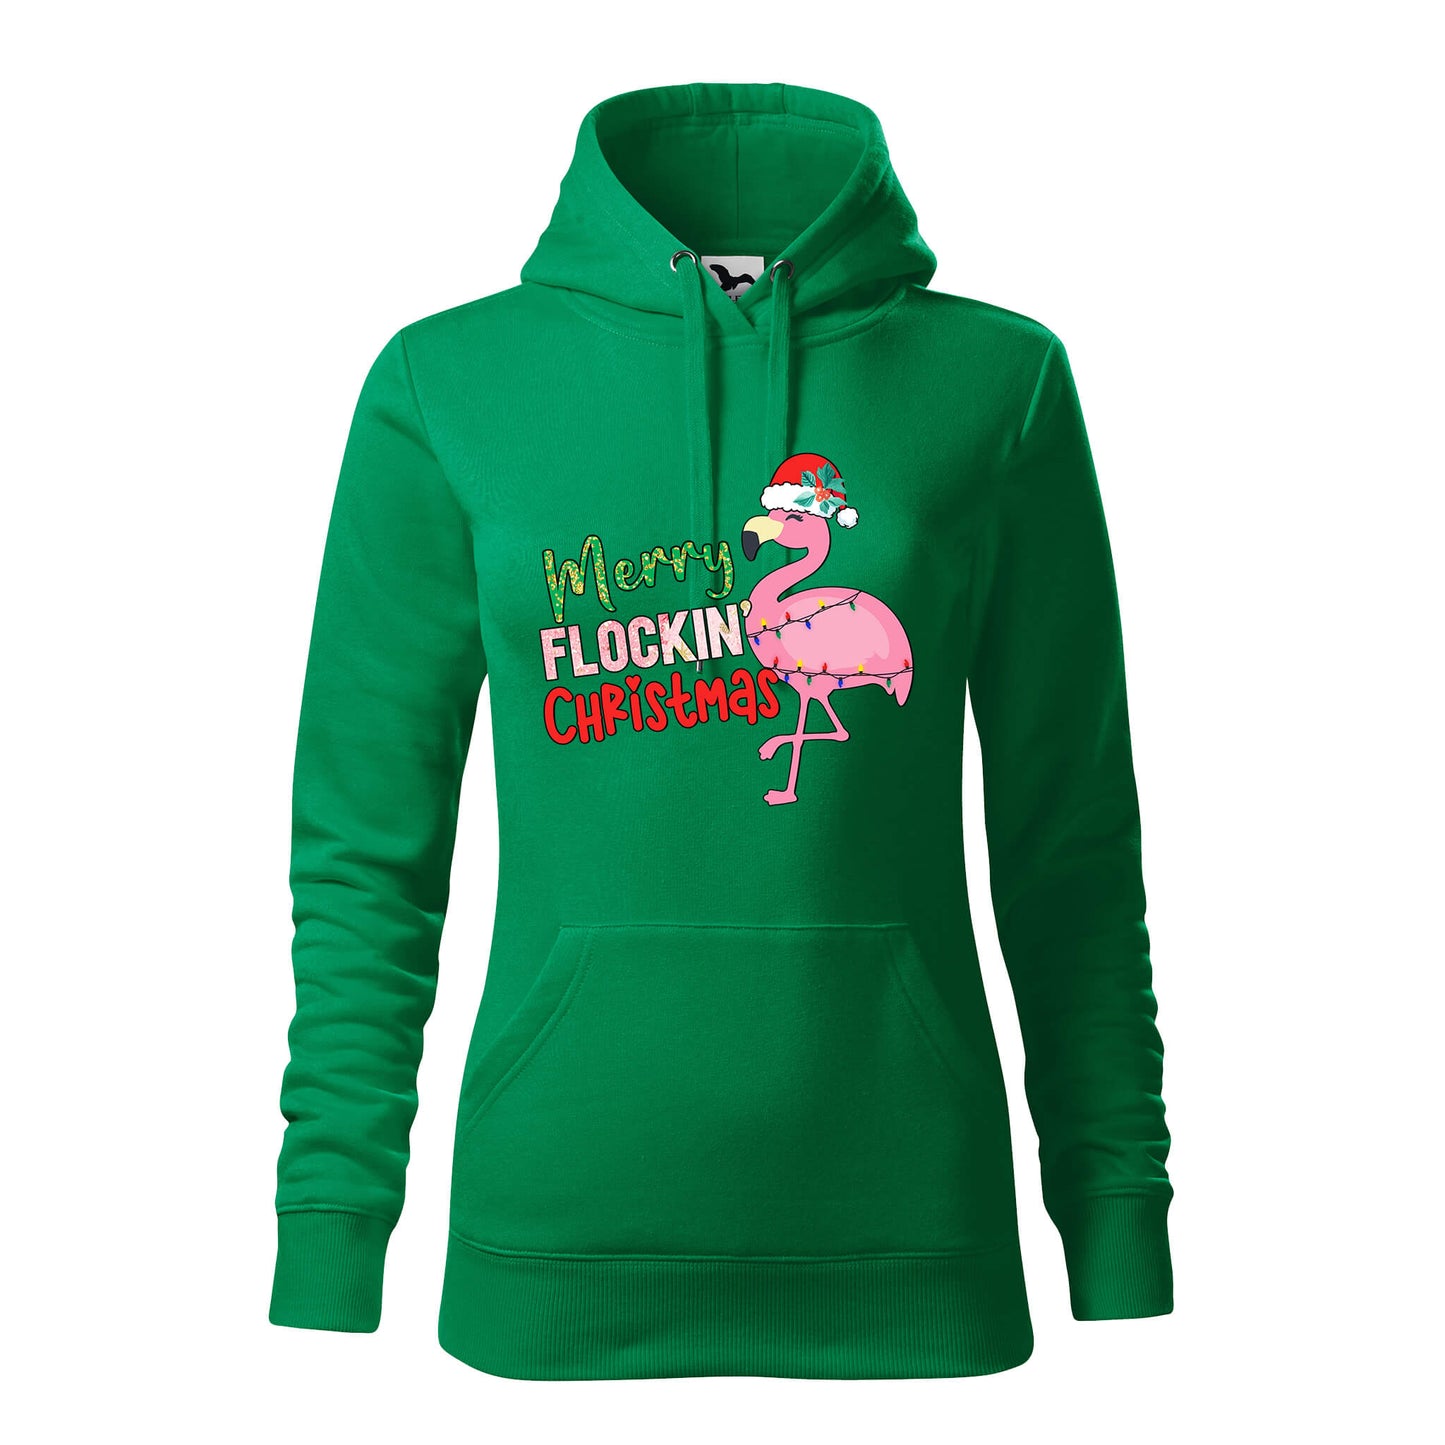 Merry flockin christmas hoodie - rvdesignprint